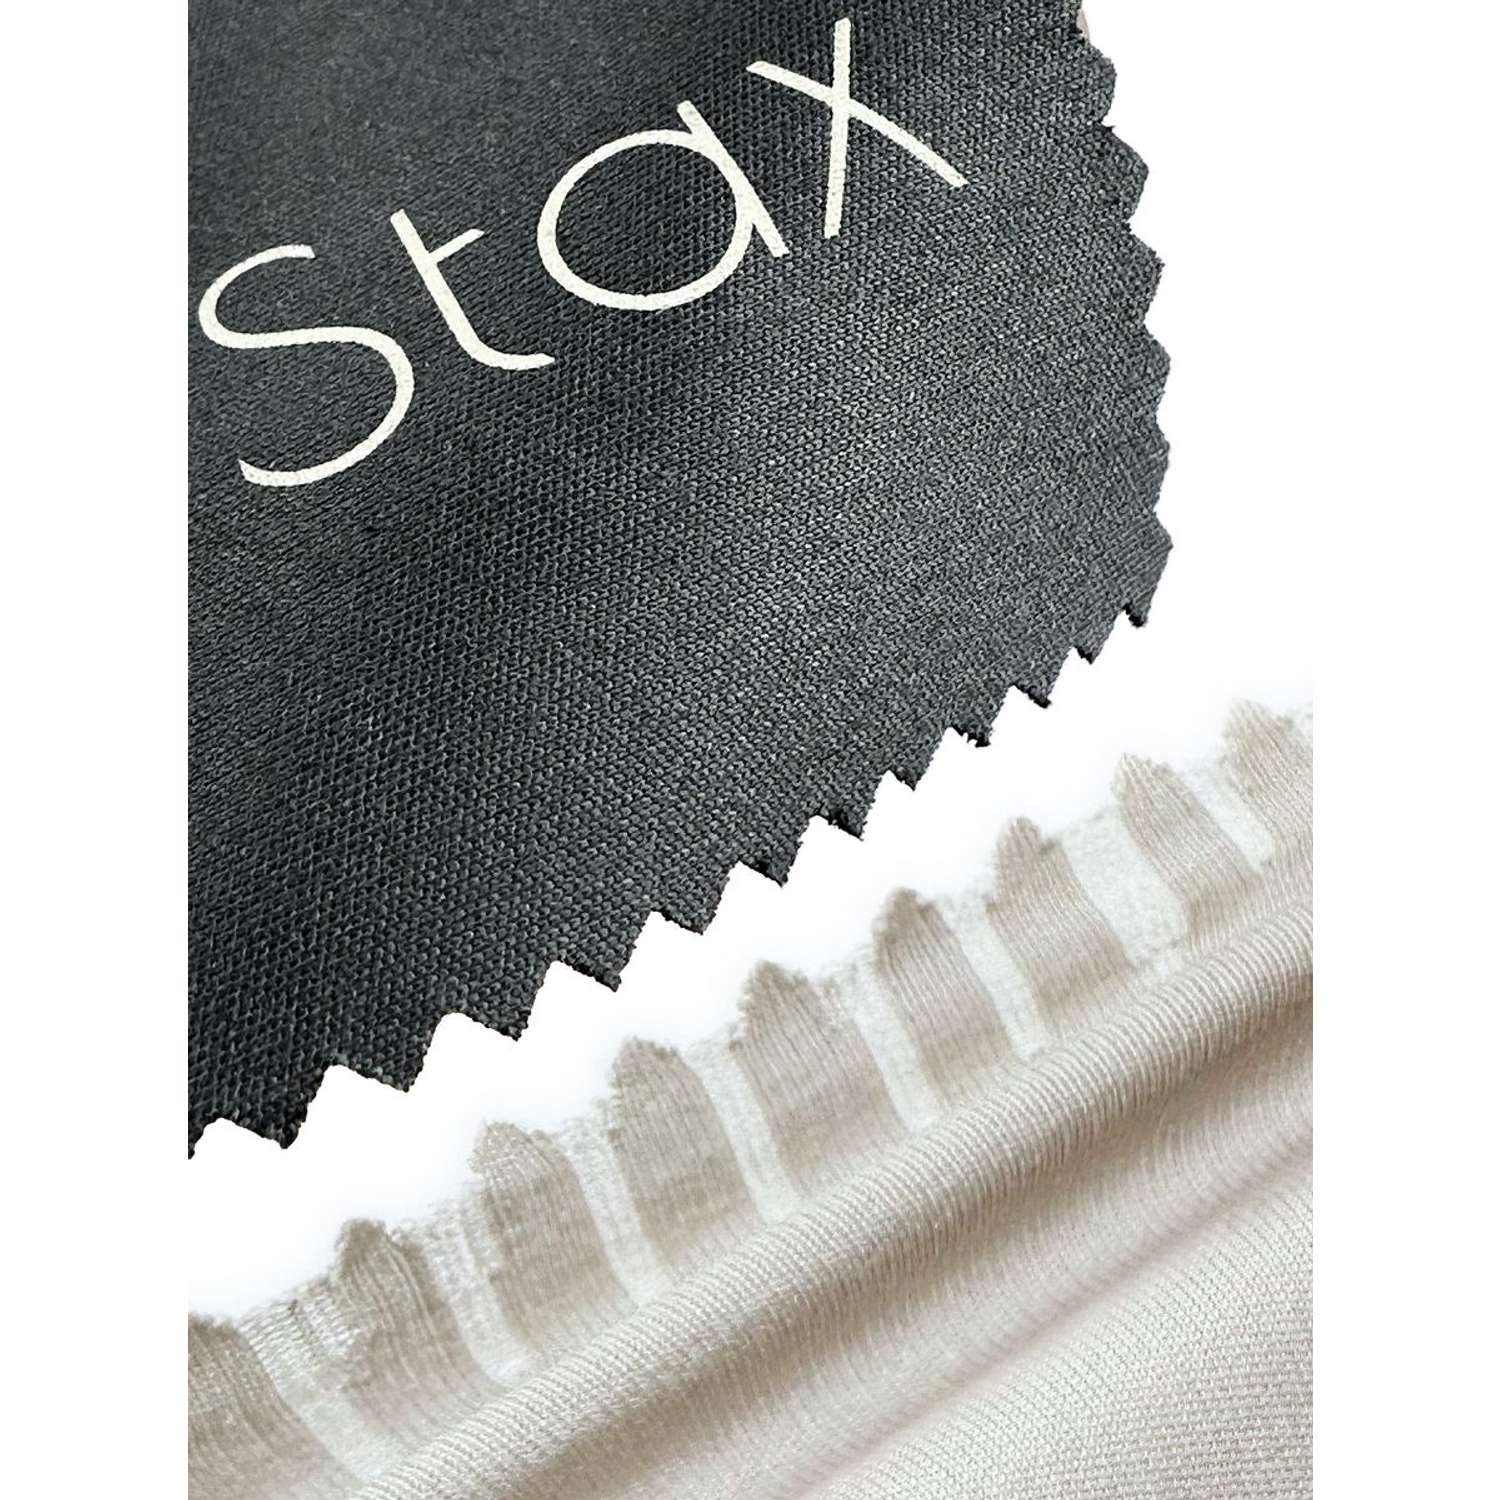 Спрей и салфетка для очков Stax нп - фото 9